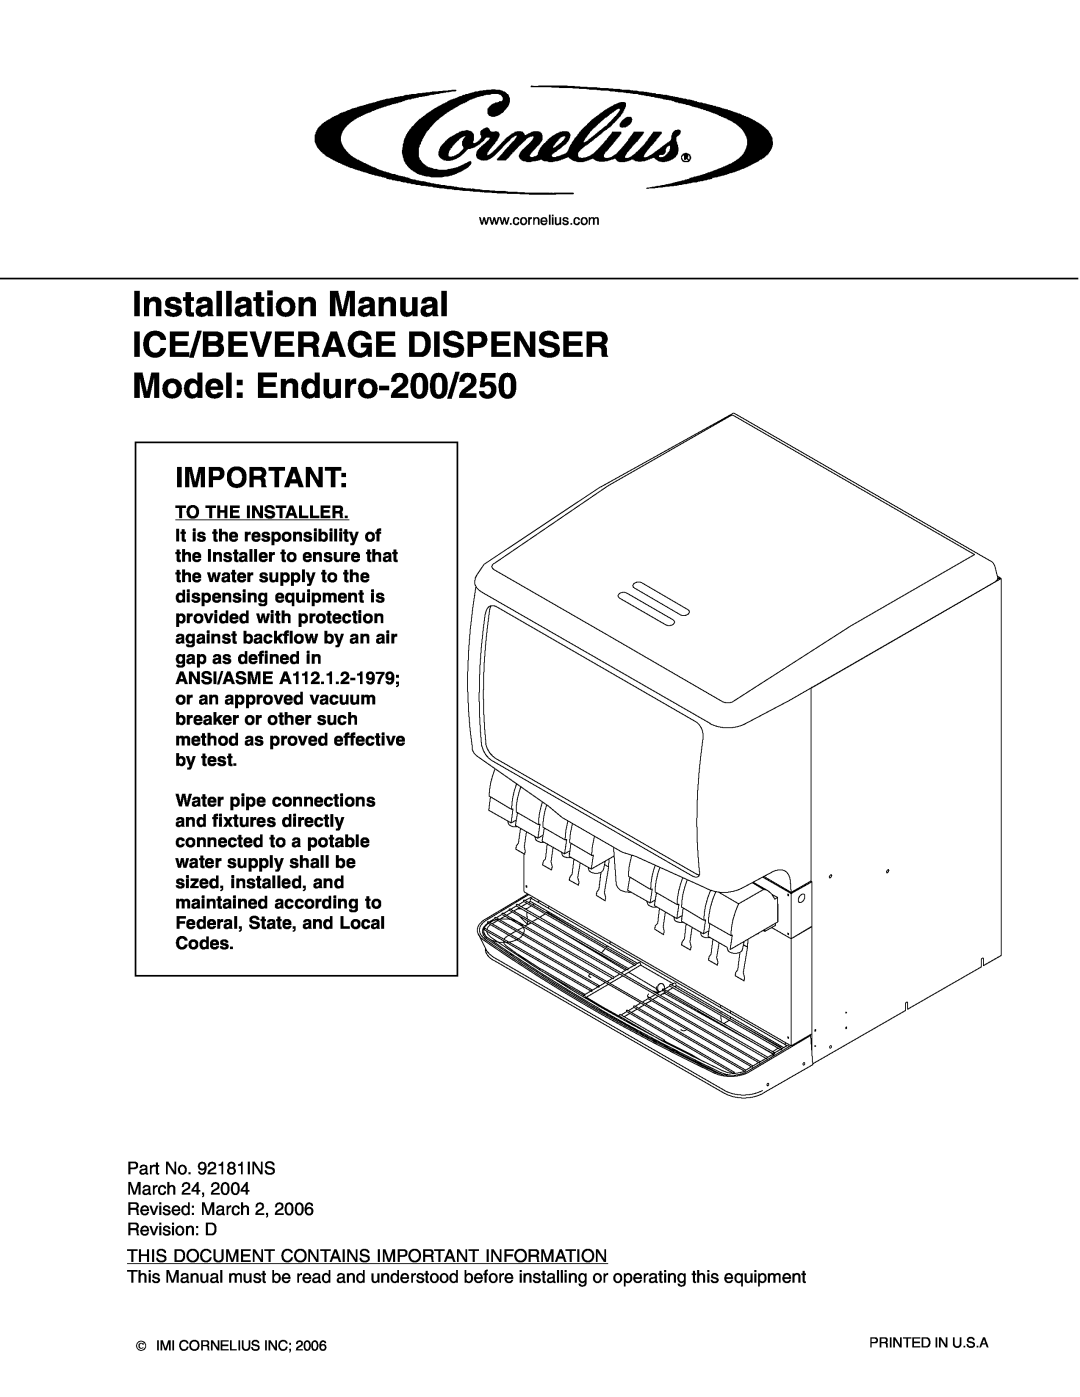 Cornelius installation manual Installation Manual ICE/BEVERAGE DISPENSER, Model Enduro-200/250 